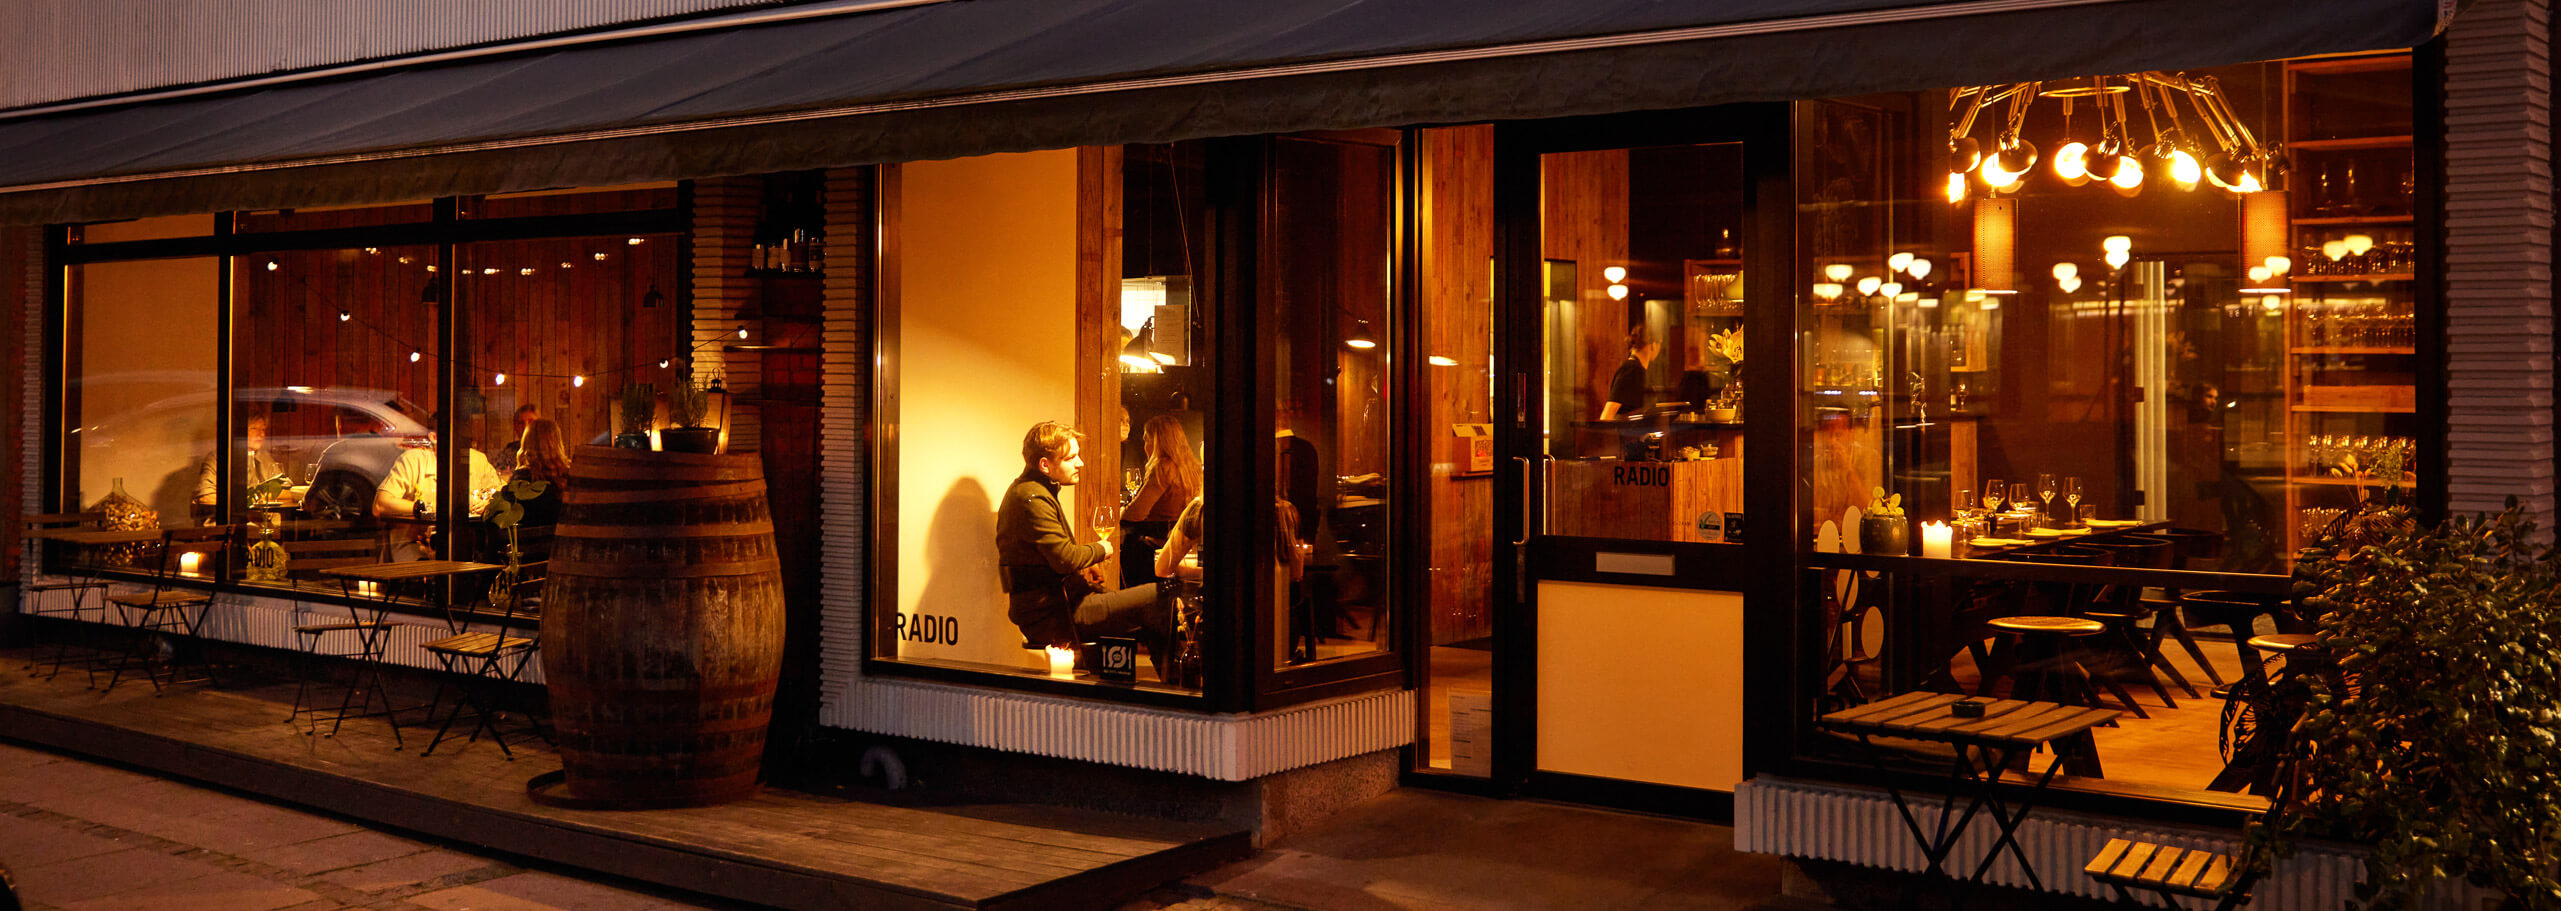 Restaurant RADIO på Frederiksberg facade med hyggelig belysning og stemning